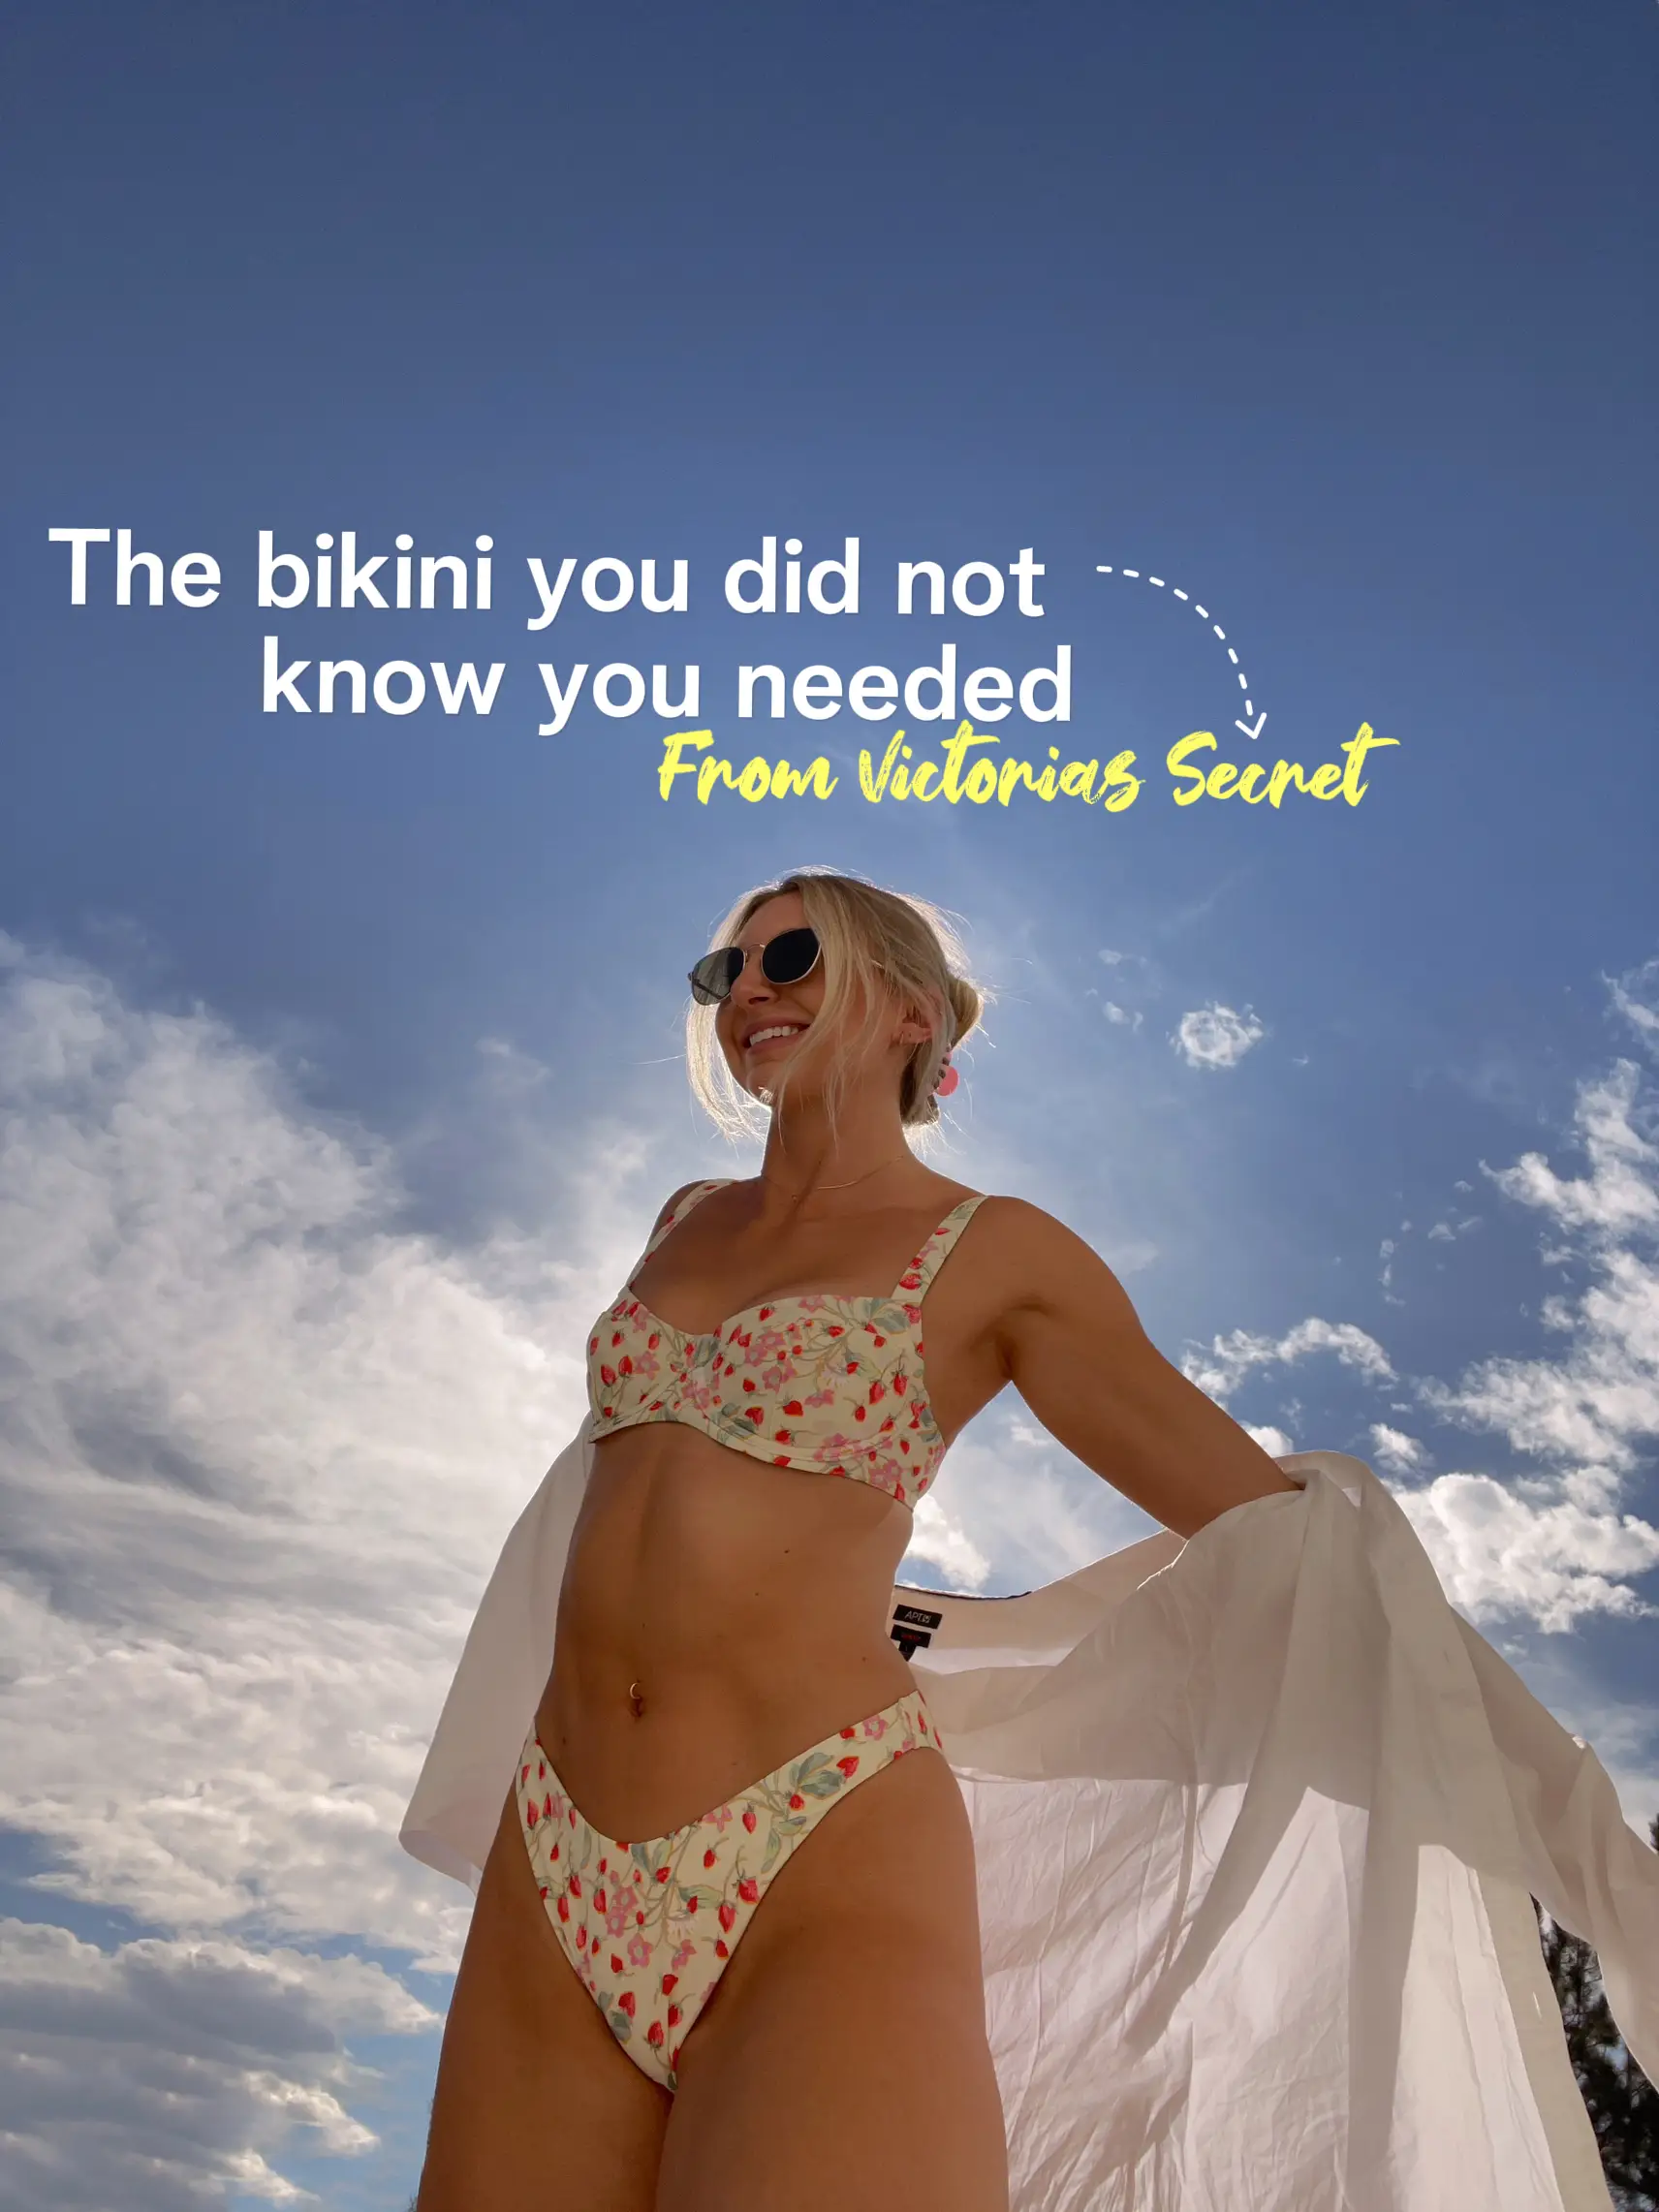 NIP -- VICTORIA'S SECRET Sparkly Peach Cheeky Bikini Bottom -- XS